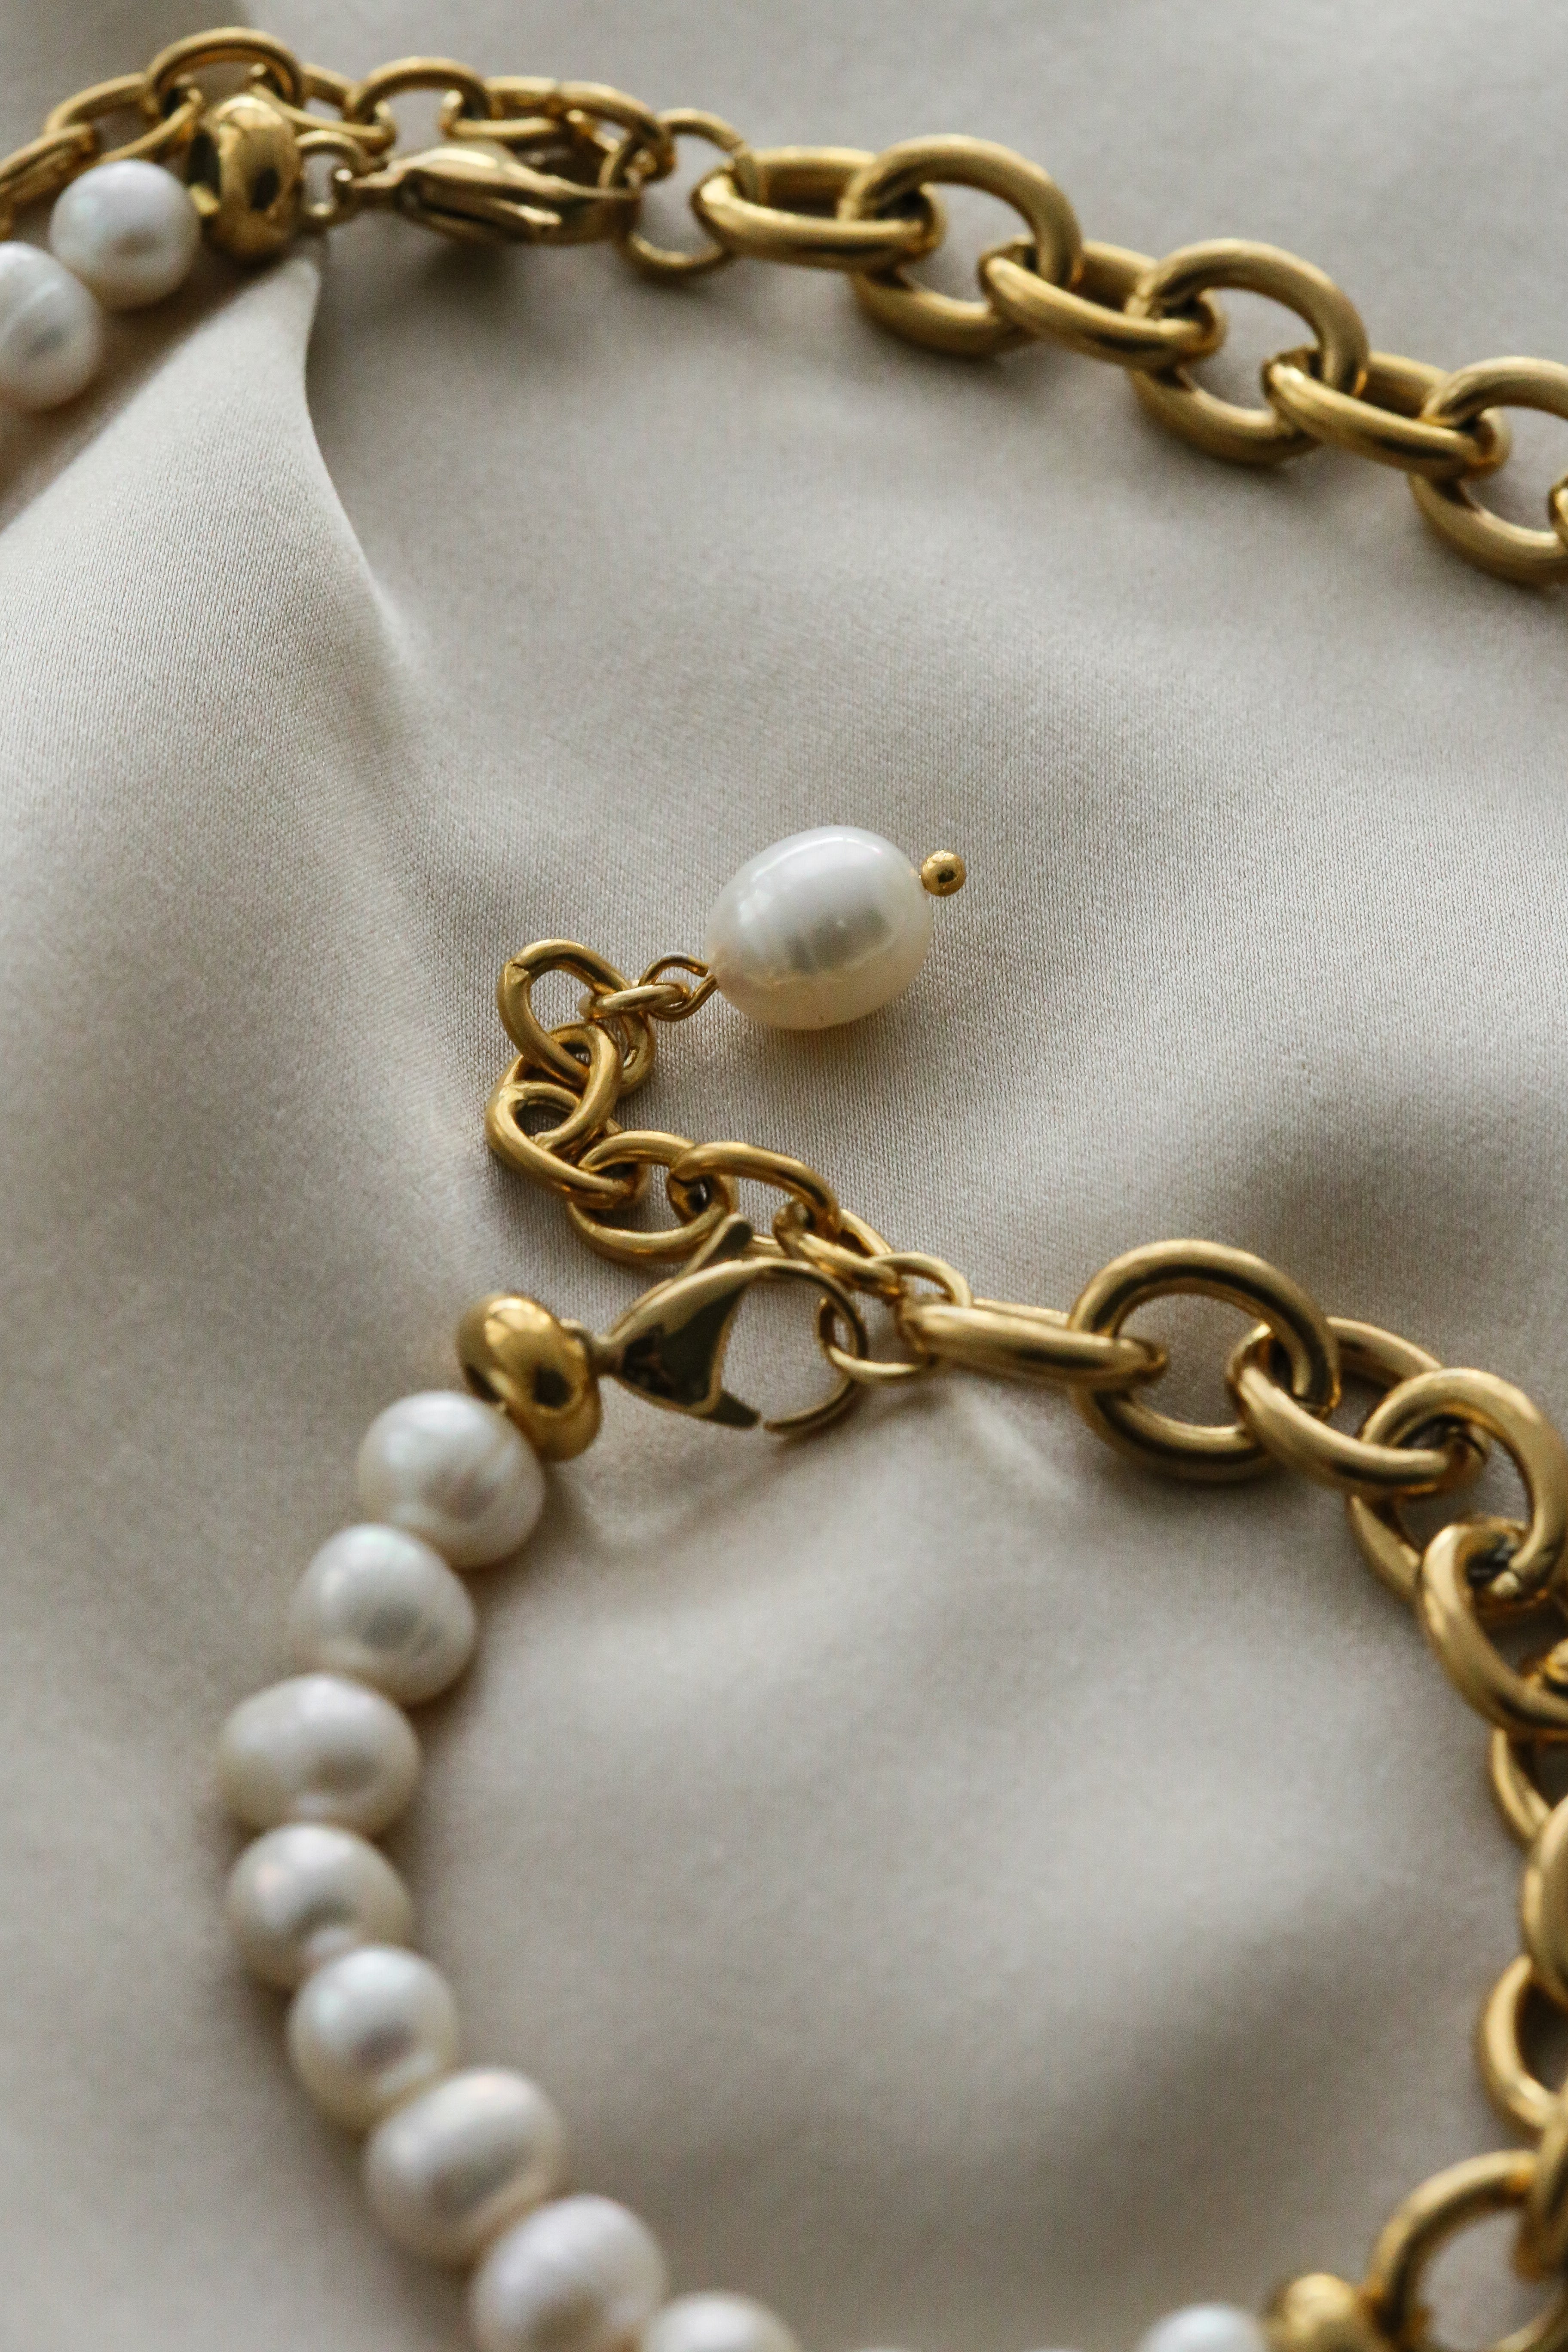 Valerie Bracelet - Boutique Minimaliste has waterproof, durable, elegant and vintage inspired jewelry